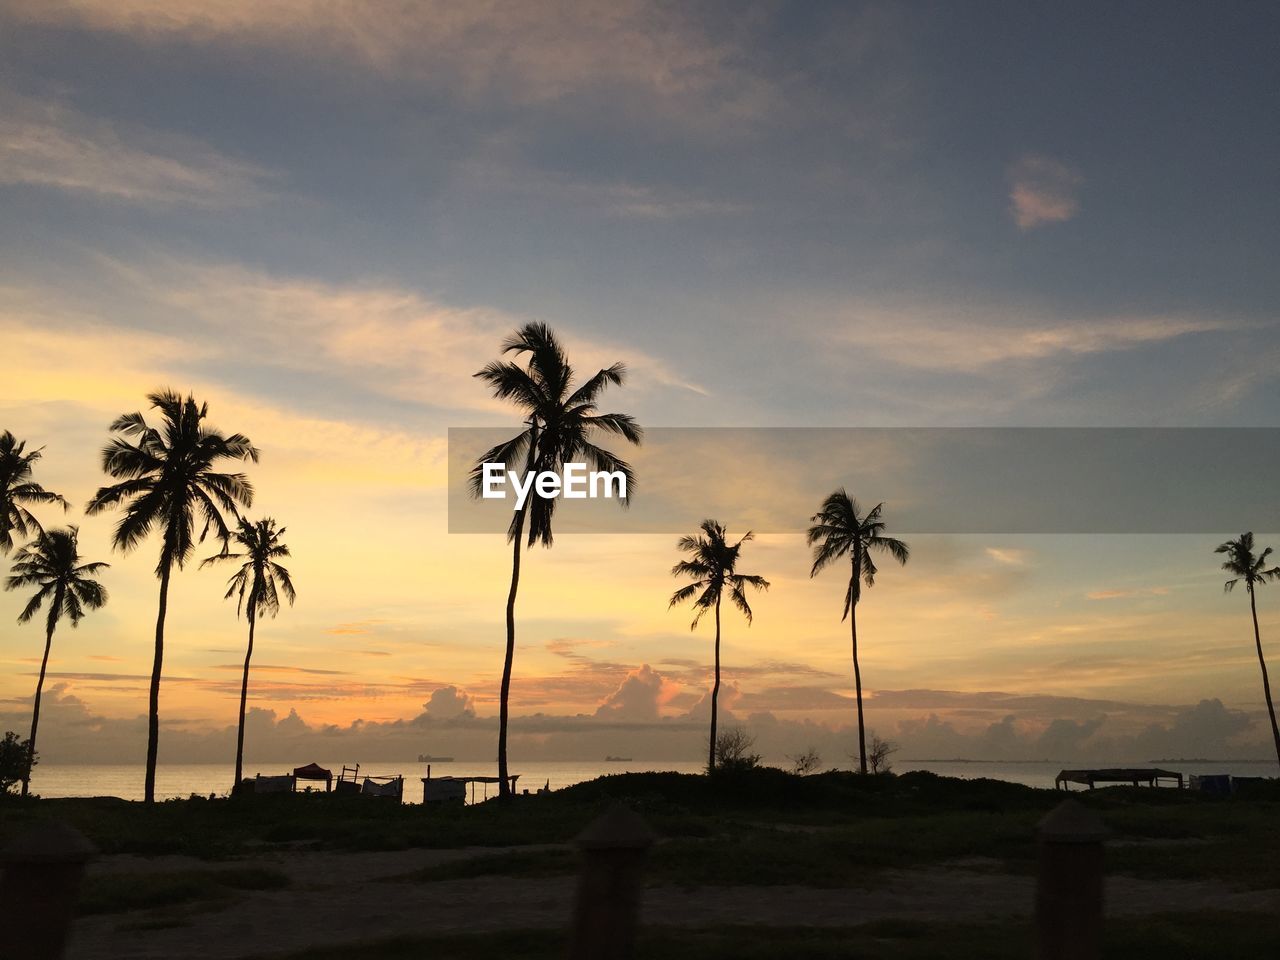 SILHOUETTE PALM TREES ON BEACH AGAINST SUNSET SKY